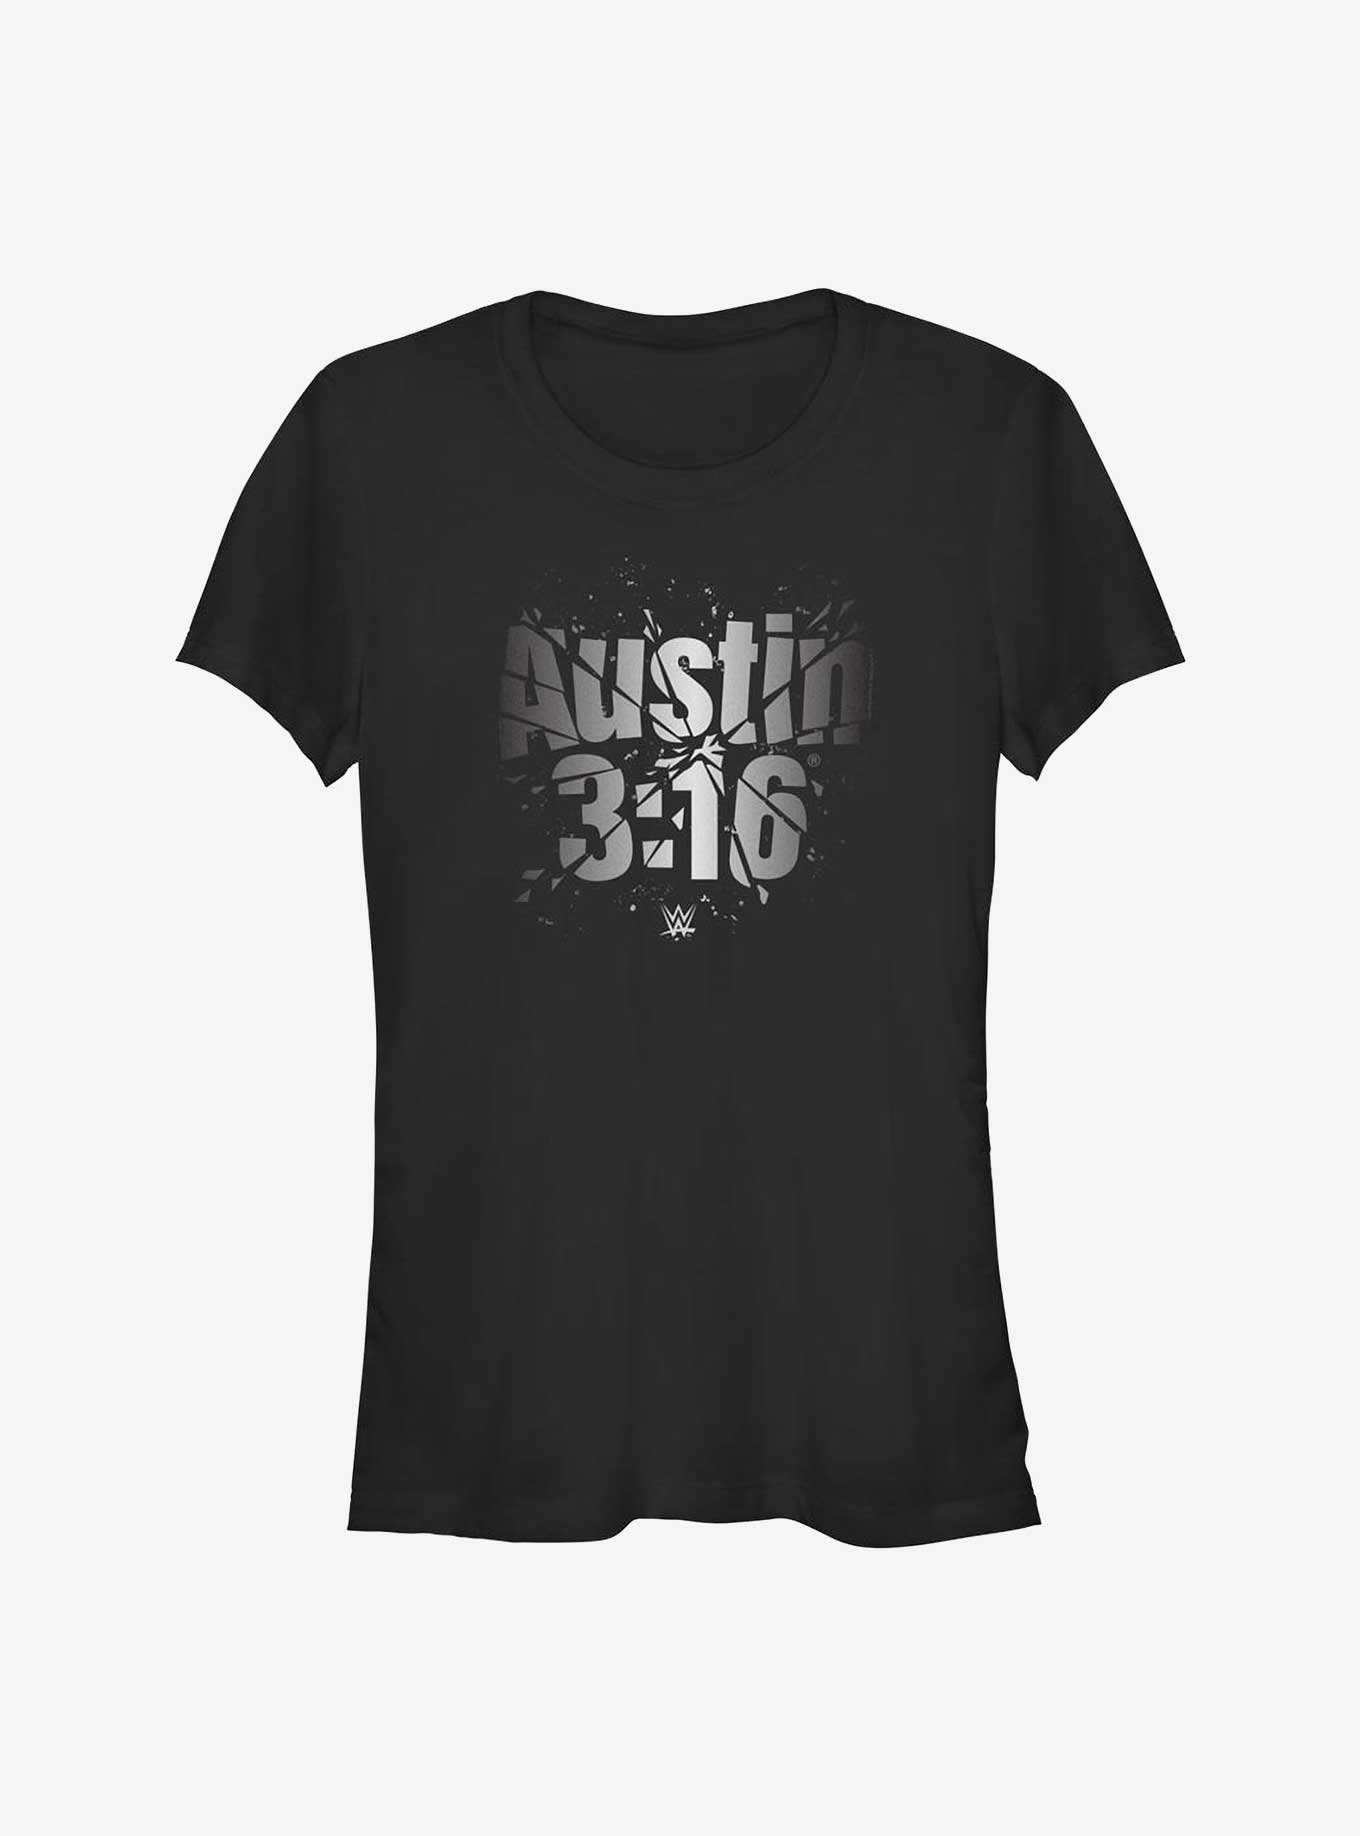 WWE Stone Cold Steve Austin 3:16 Logo Girls T-Shirt, , hi-res